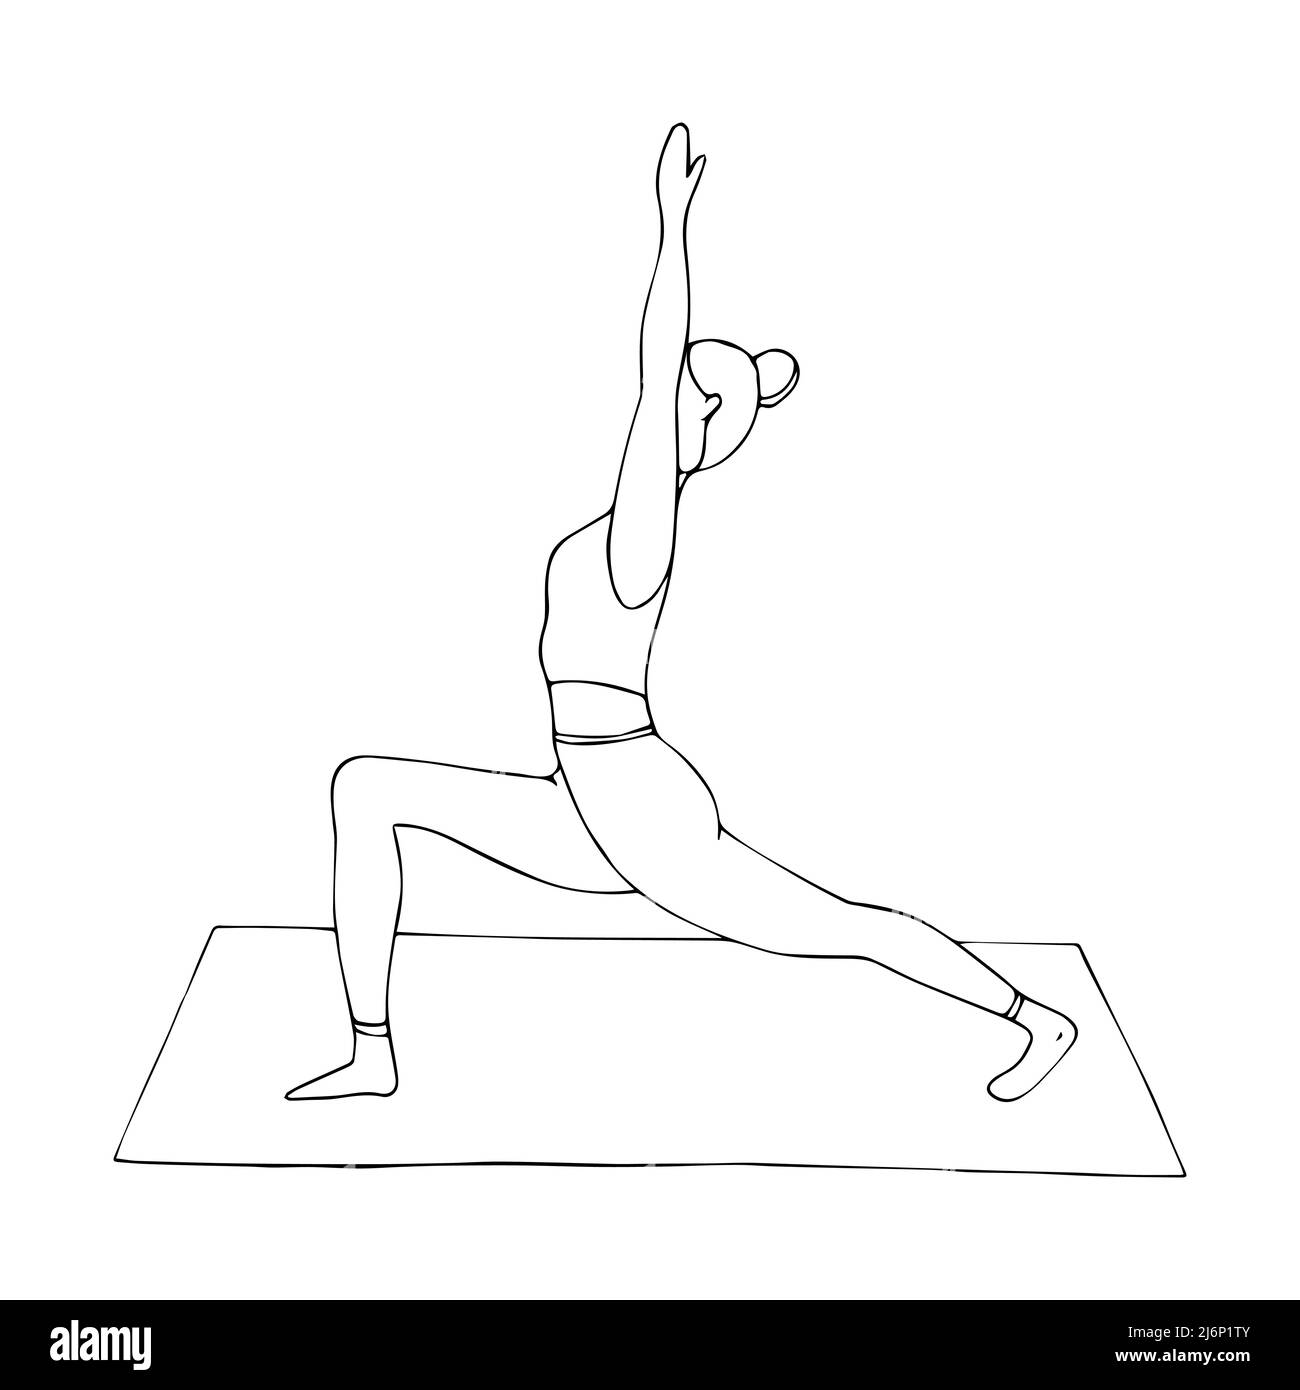 Joga Poses stock illustration. Illustration of shape, graphics - 4356633